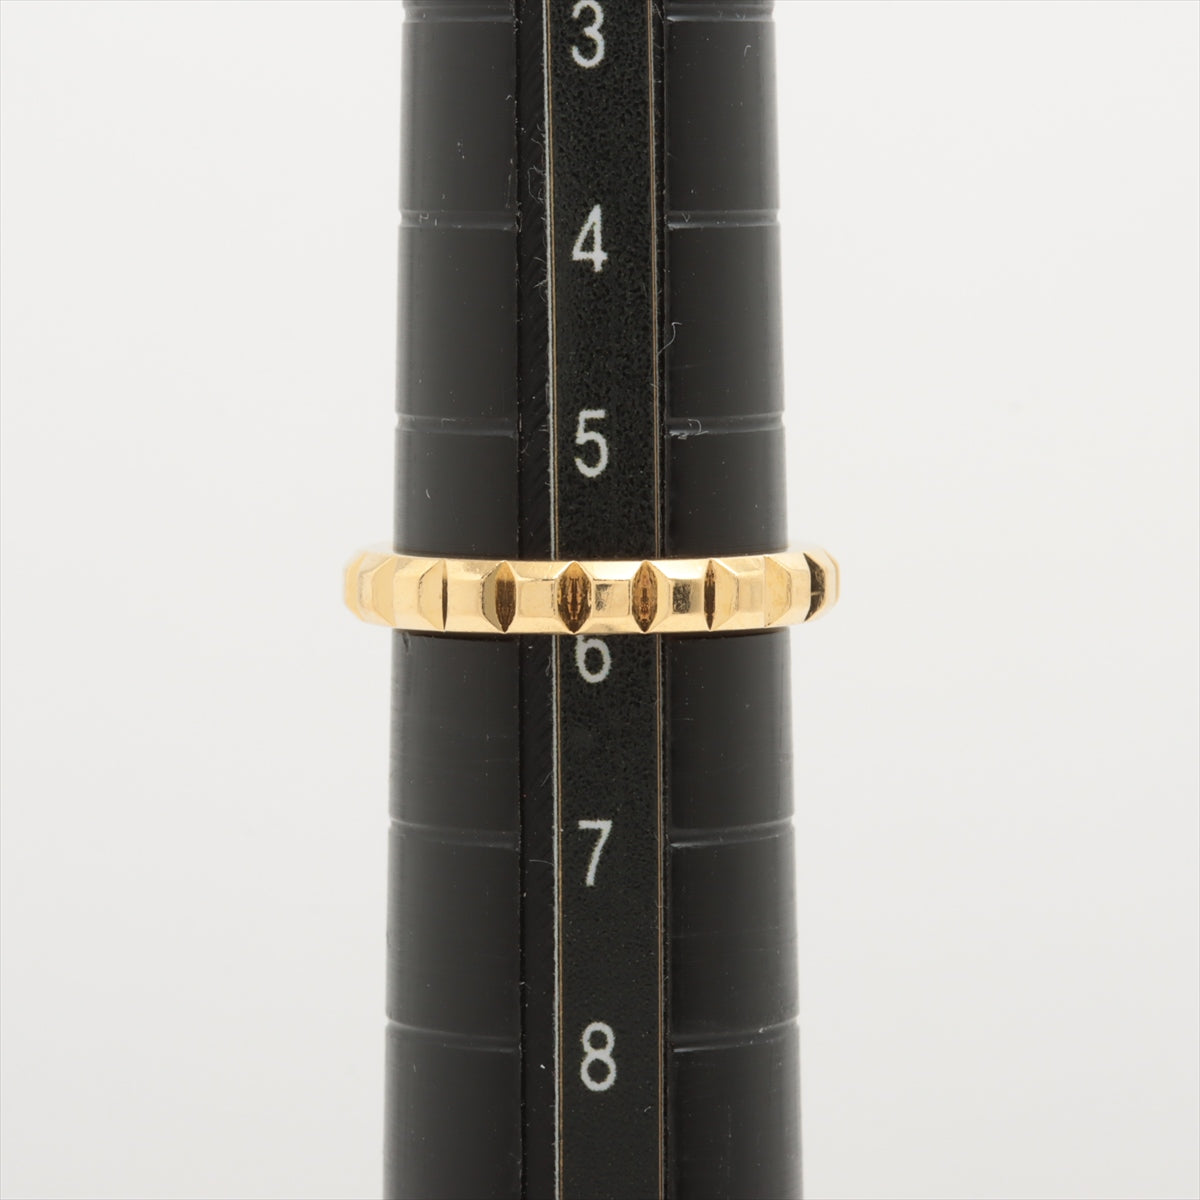 Boucheron Clou de Paris rings 750(YG) 3.3g 46